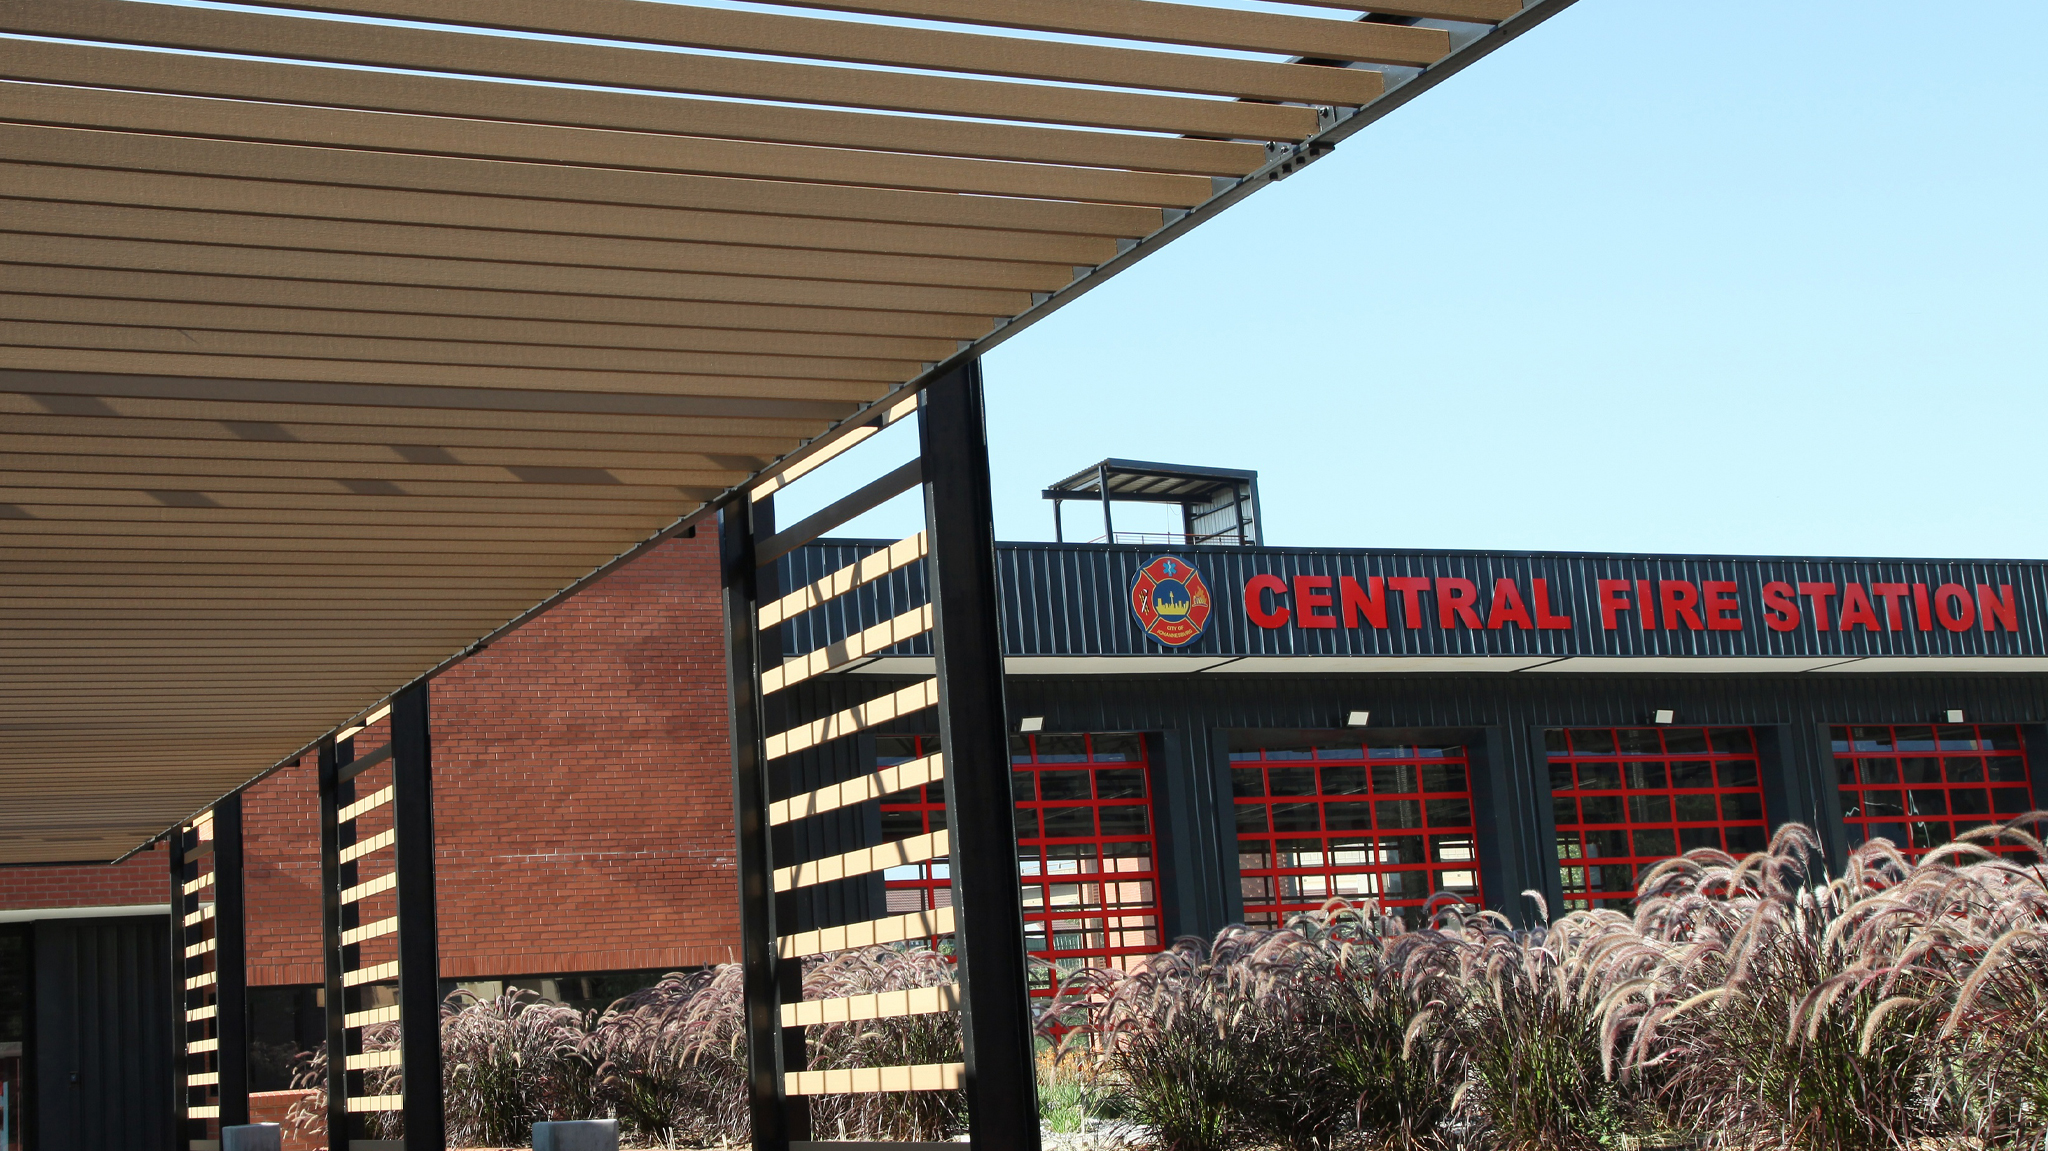 JHB Central Fire Station, Marshalltown, Johannesburg, South Africa